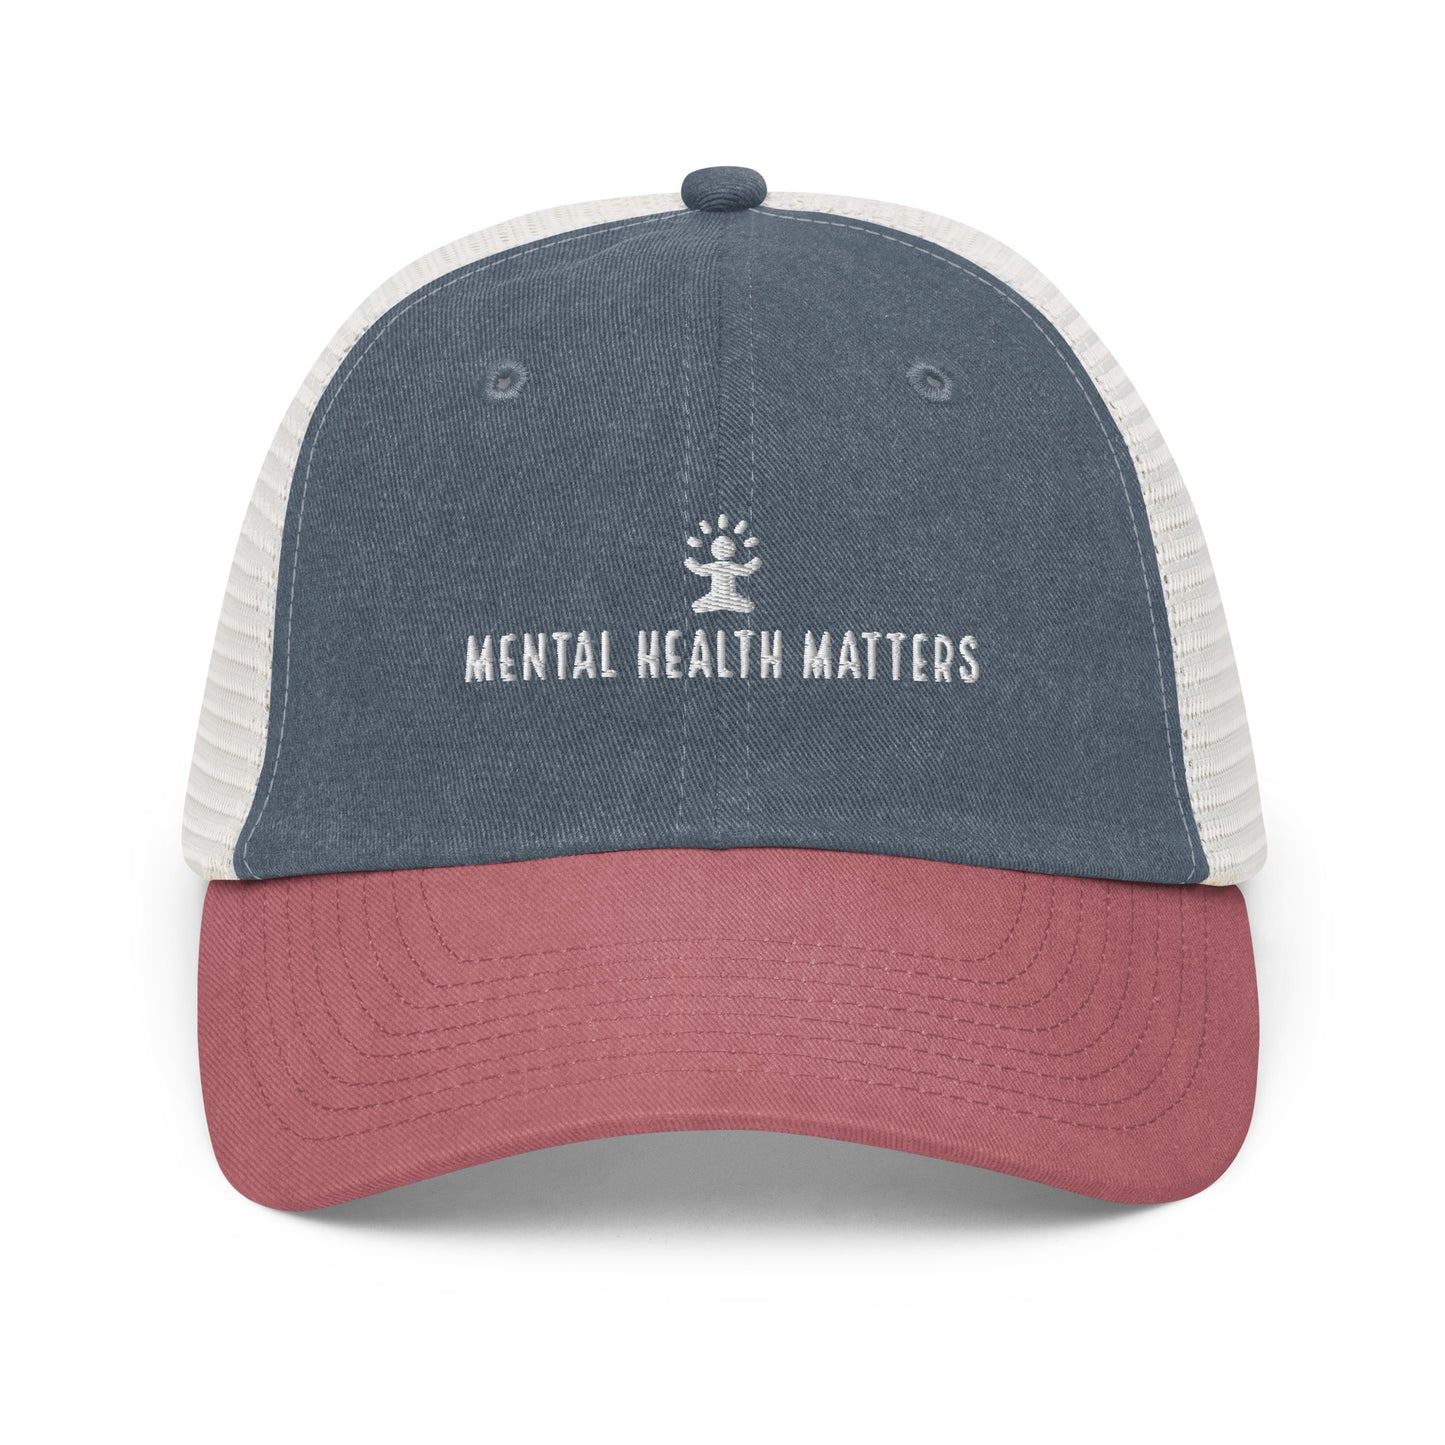 Mentals Matter Hat - Red Front